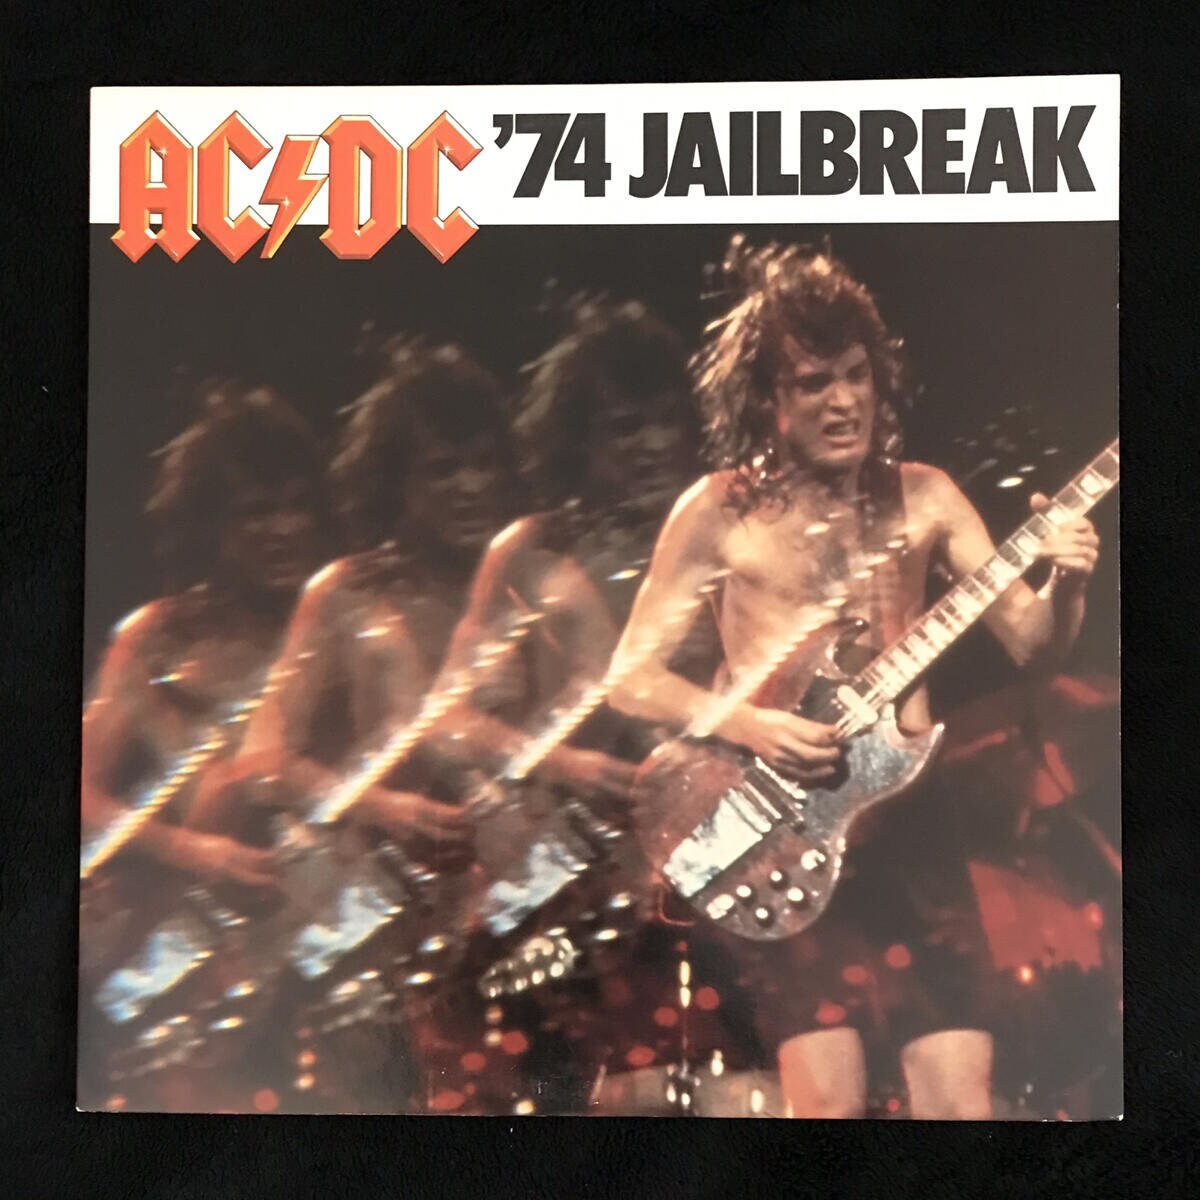 45cat - AC/DC - Jailbreak / Show Business - Atlantic - USA - 7-89614